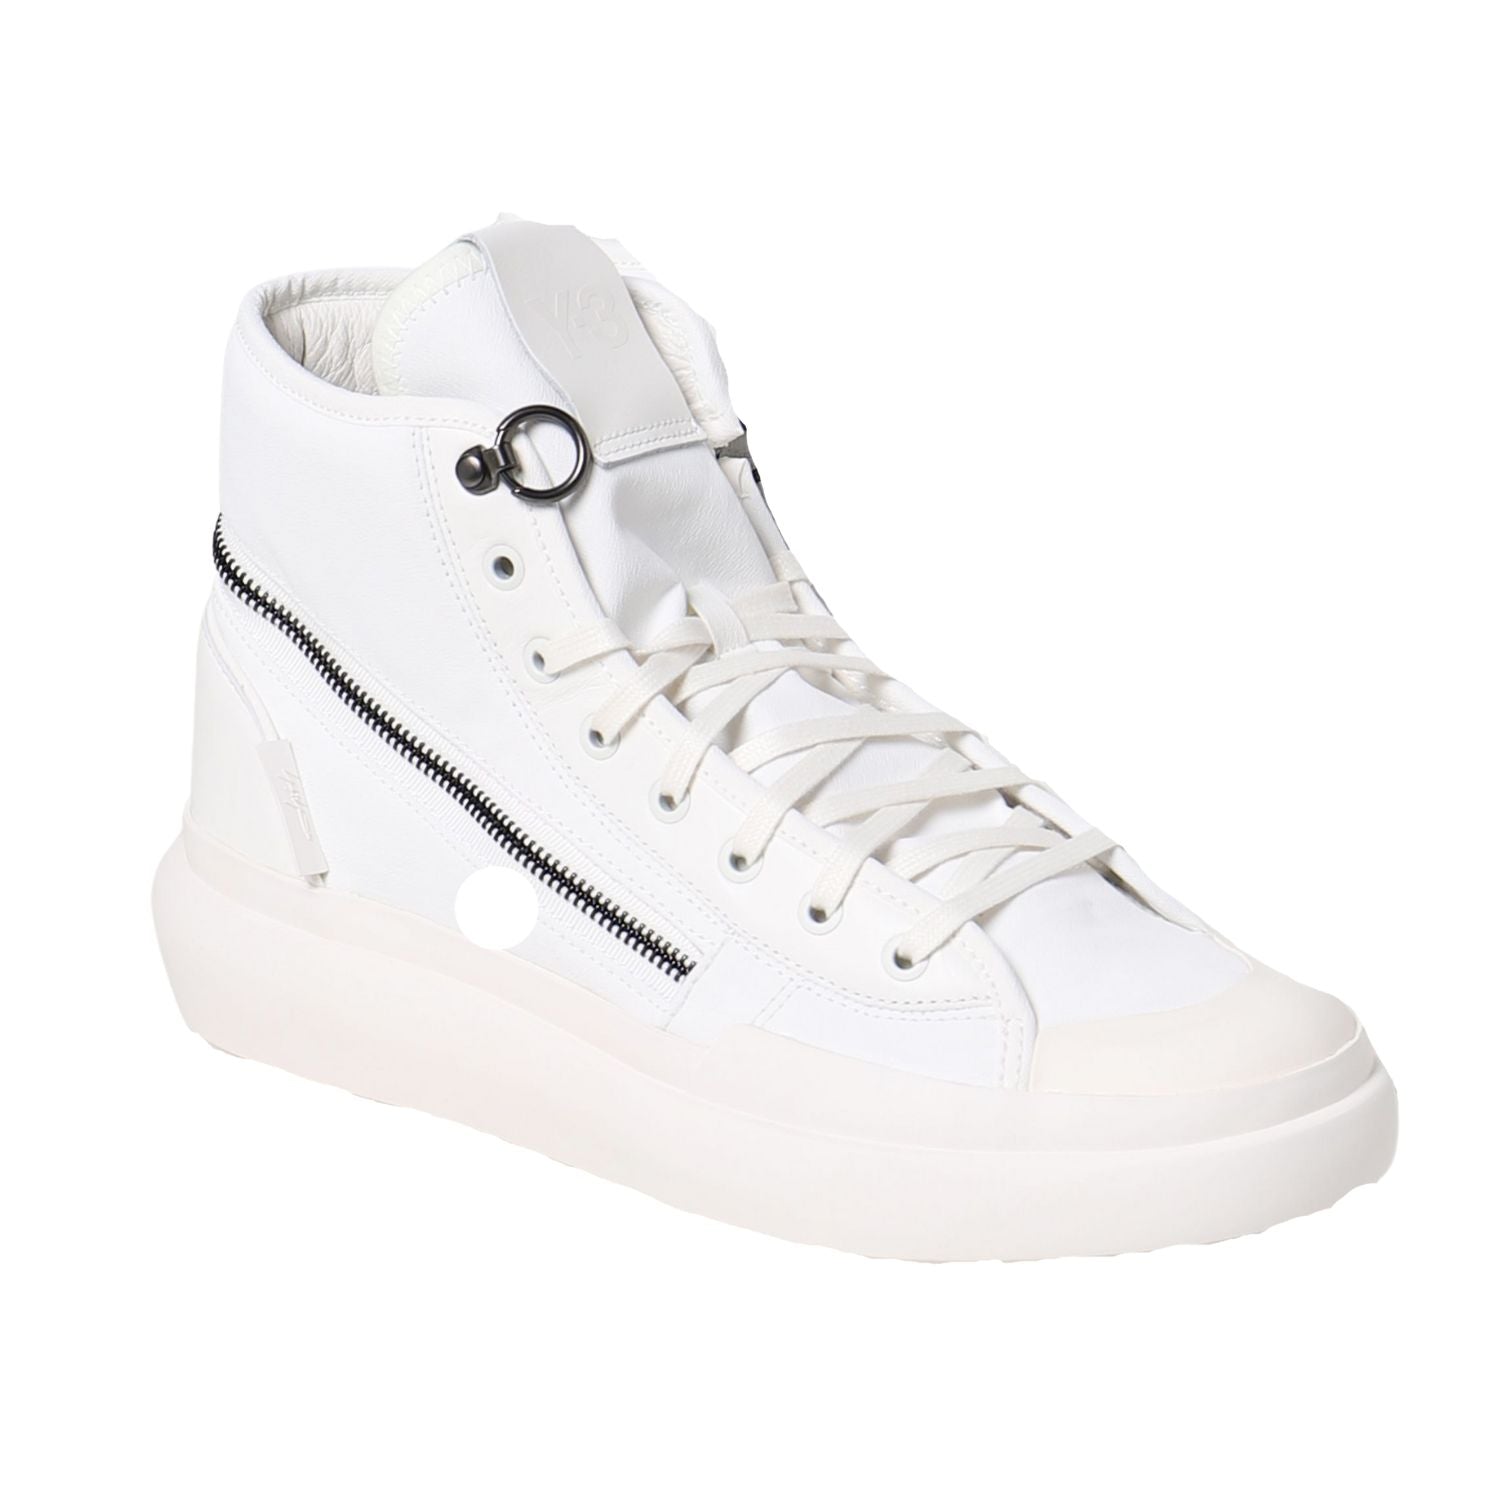 adidas Y-3 Ajatu Court High Core White Orbit Grey Cream White